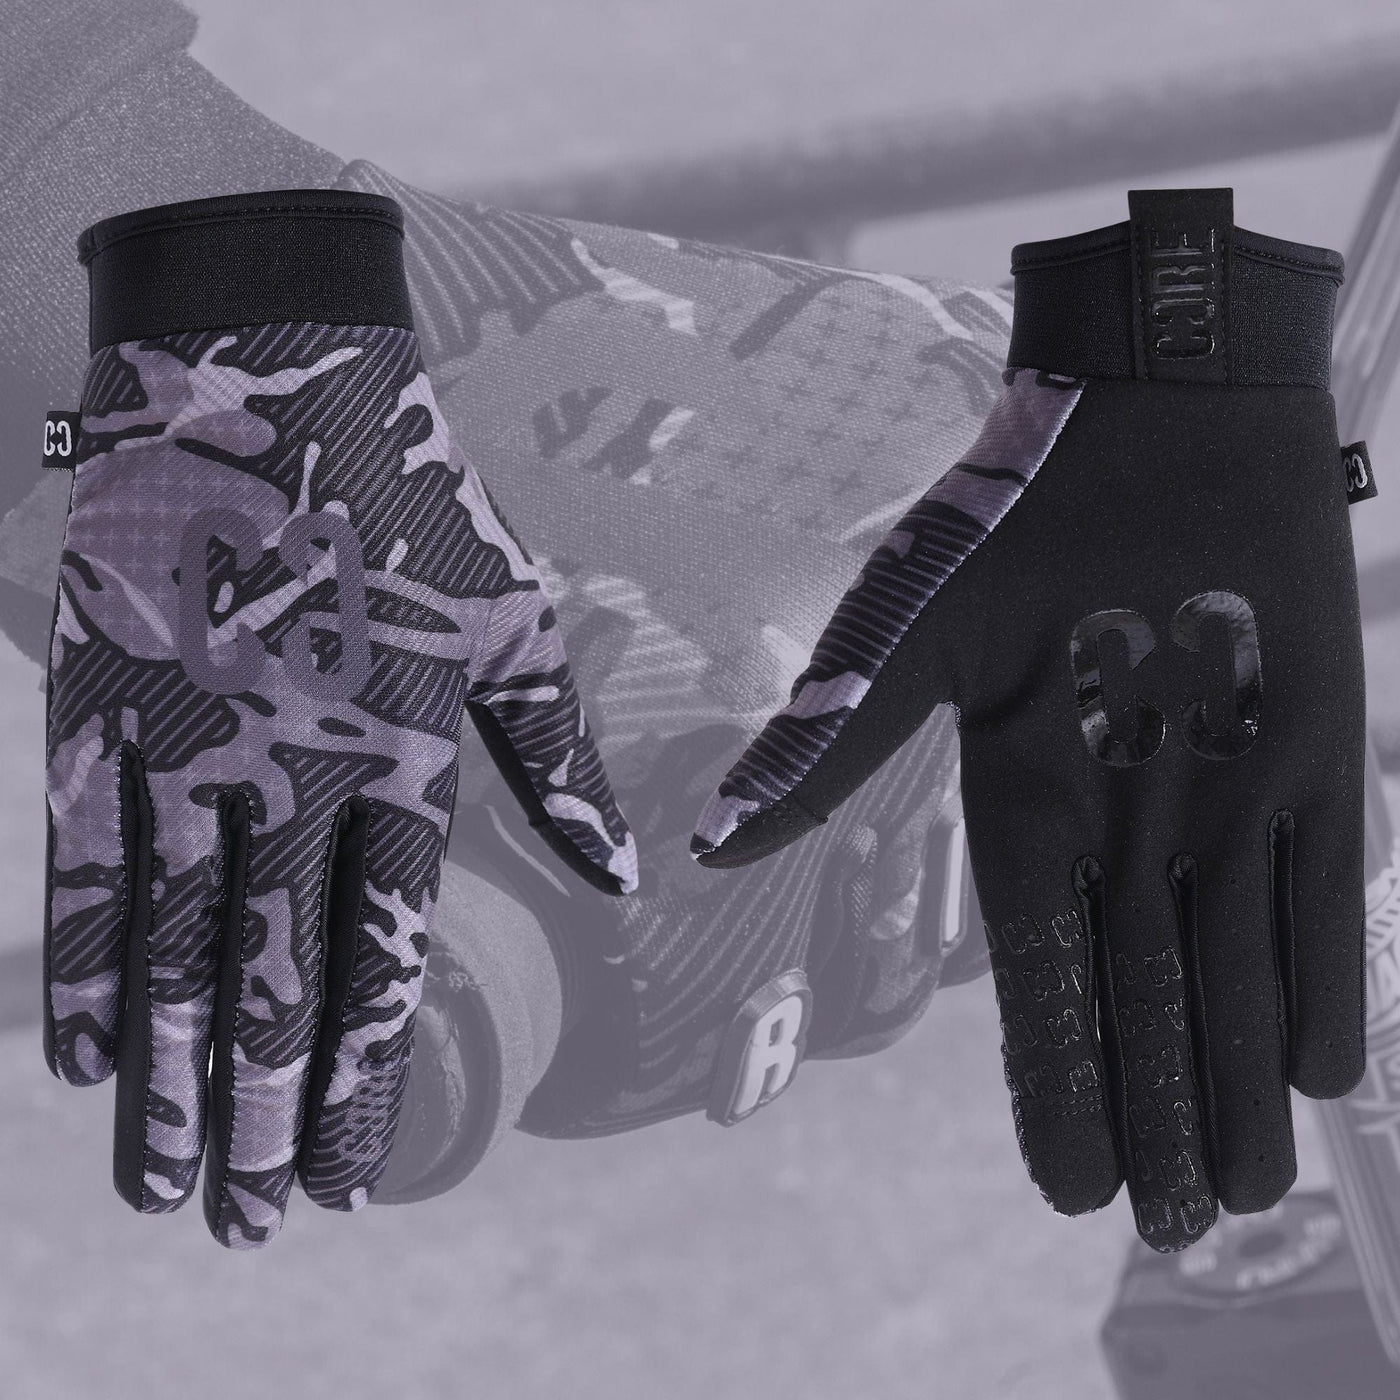 CORE Protection Aero Skateboard Gloves Black Camo I Skateboarding Gloves Pair